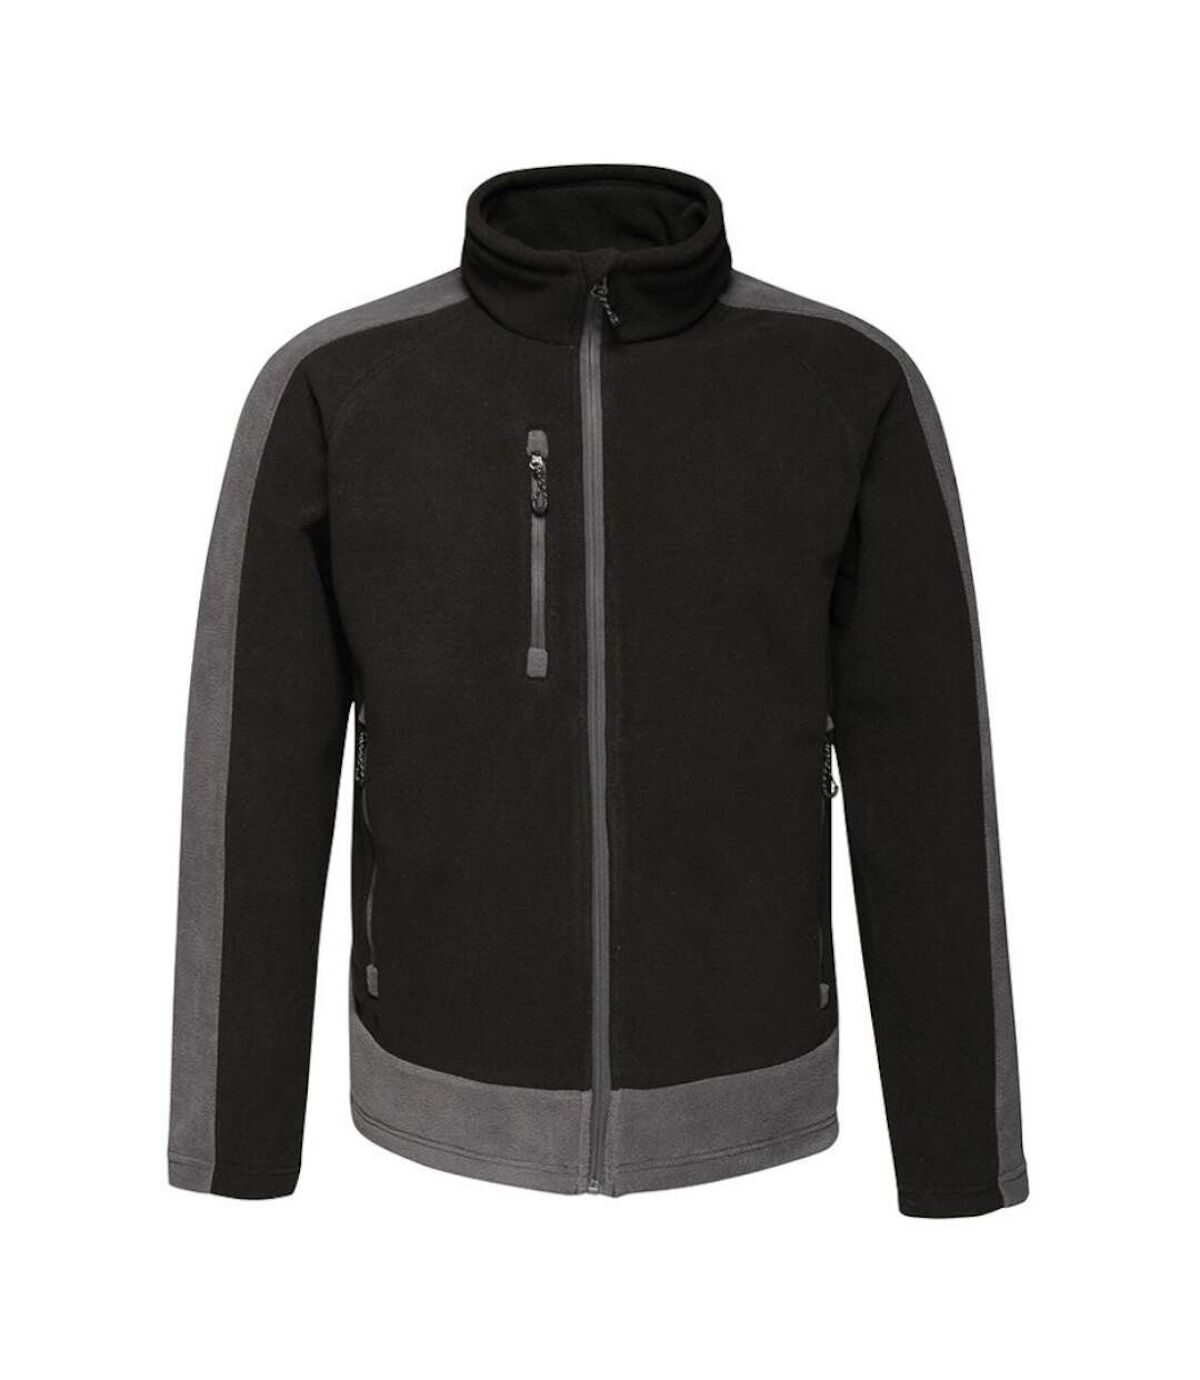 Regatta Mens Contrast 300 Fleece Jacket (Black/Seal Grey) - UTPC3319